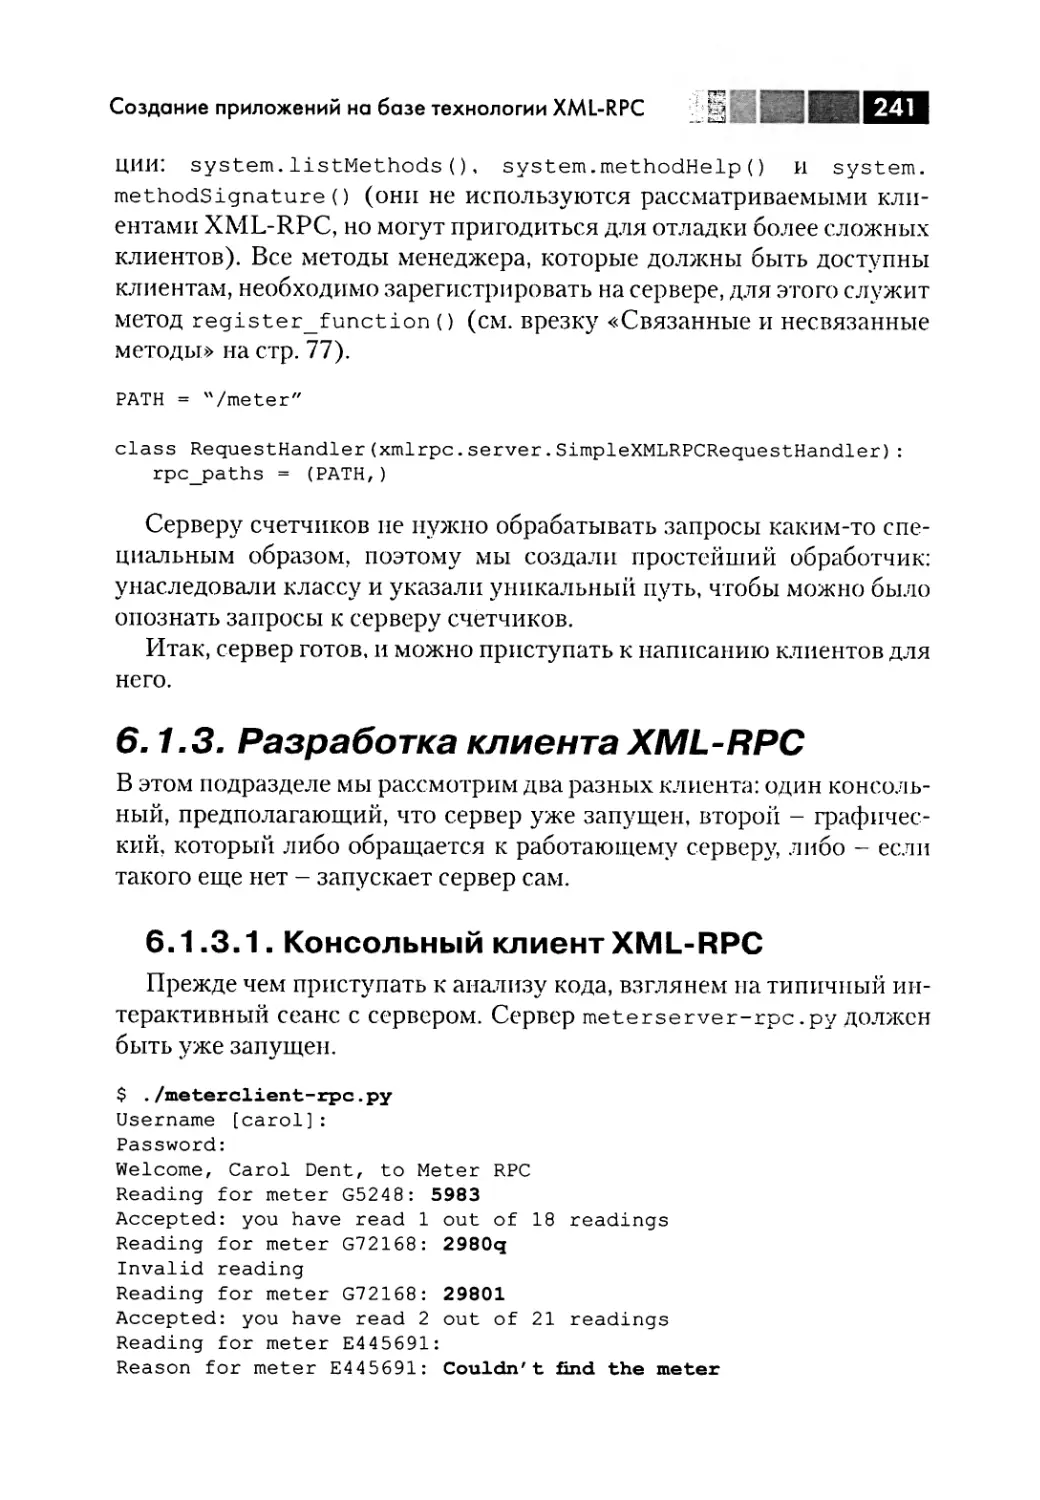 6.1.3. Разработка клиента XML-RPC